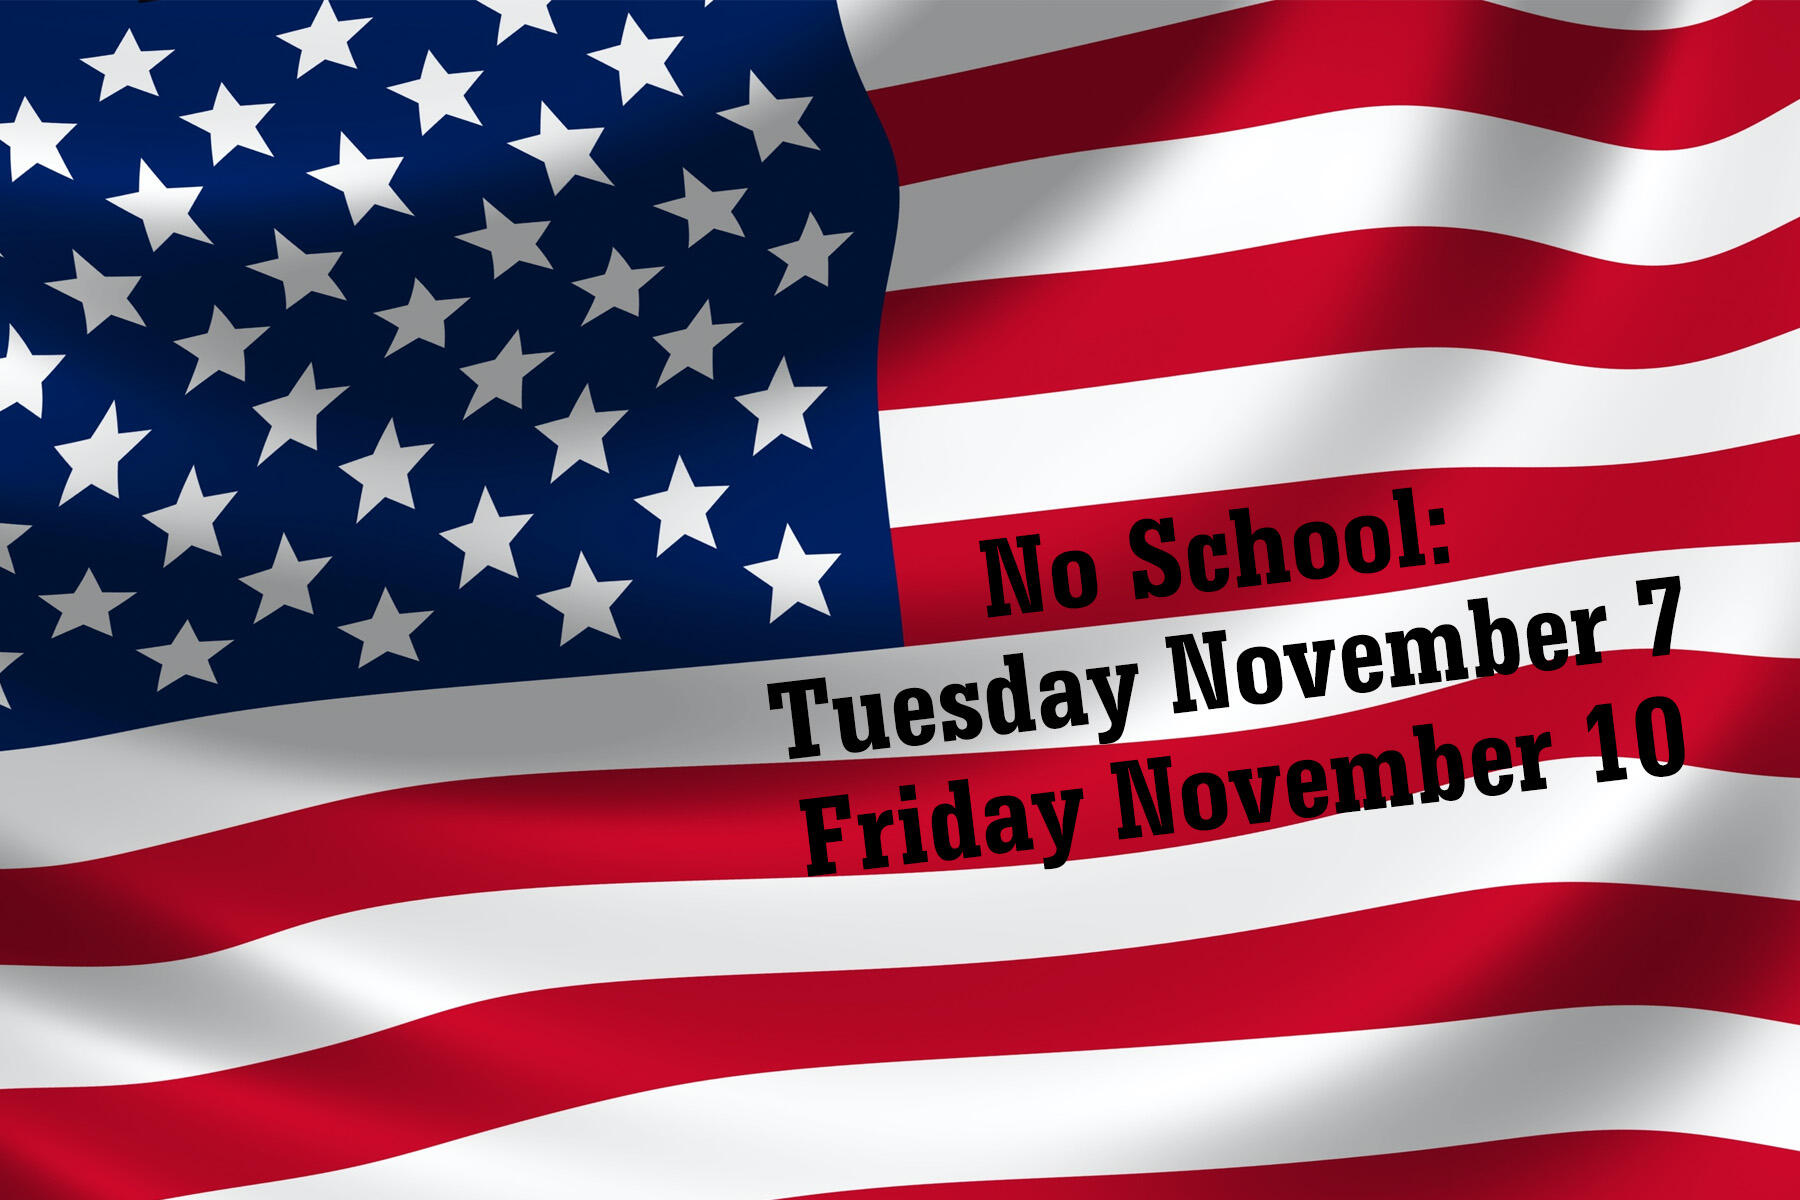 No School Tuesday November 7th & Friday November 10th